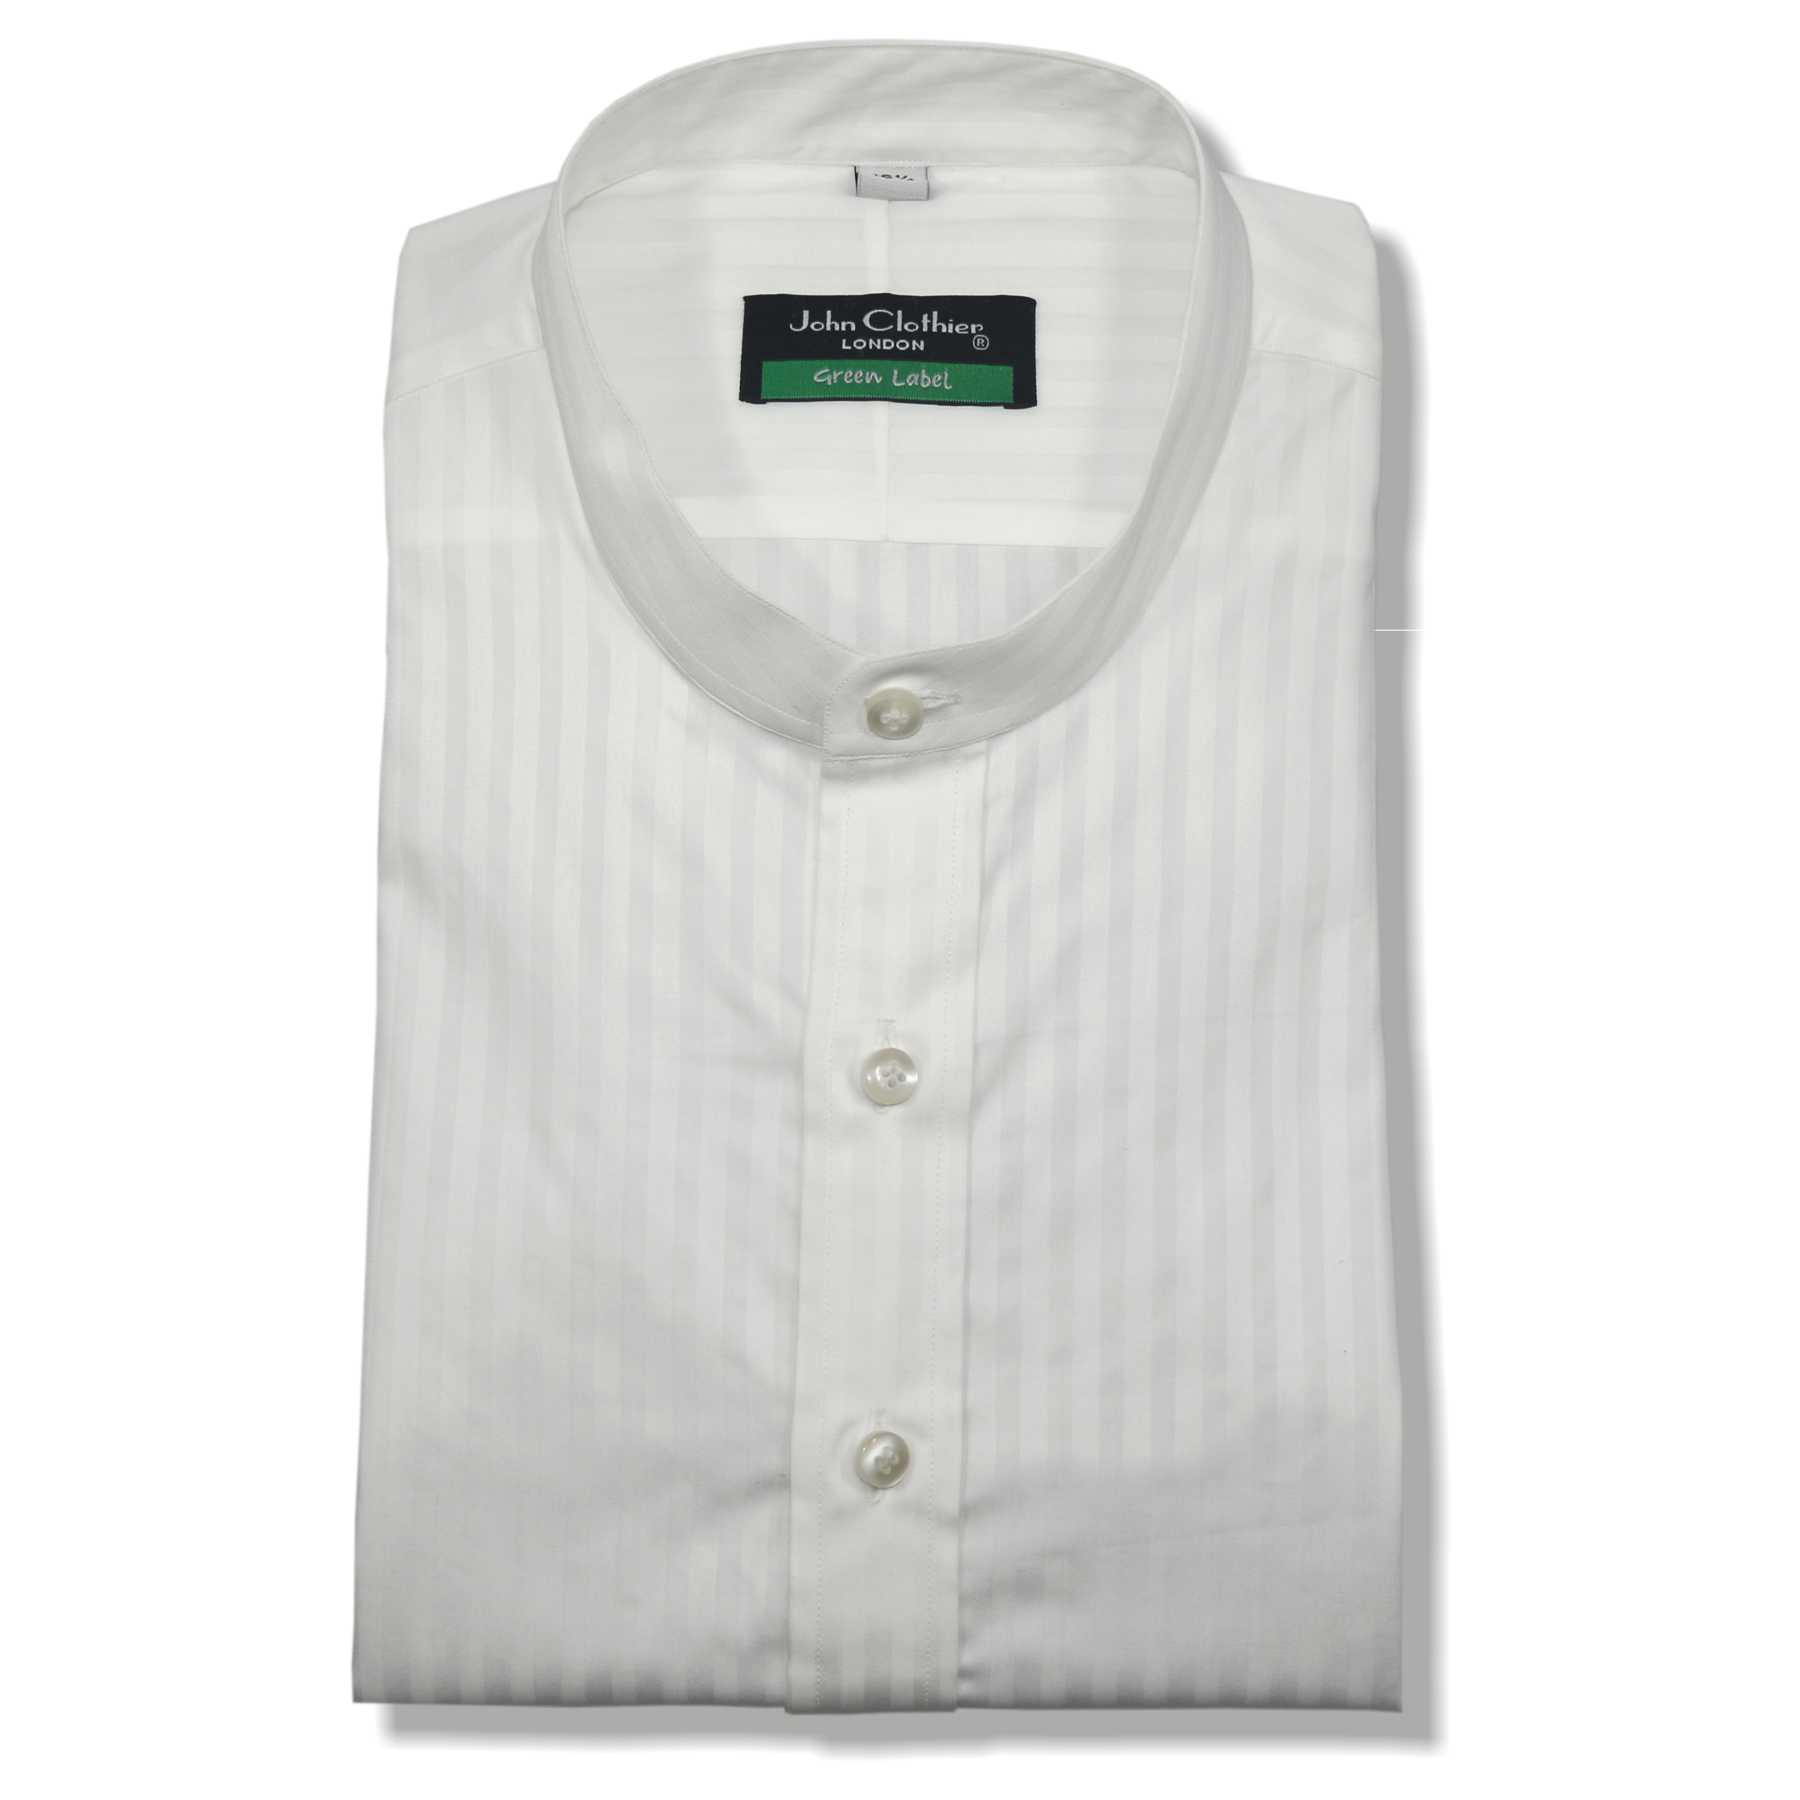 White Grandad collar shirt - John Clothier White Stripes.B